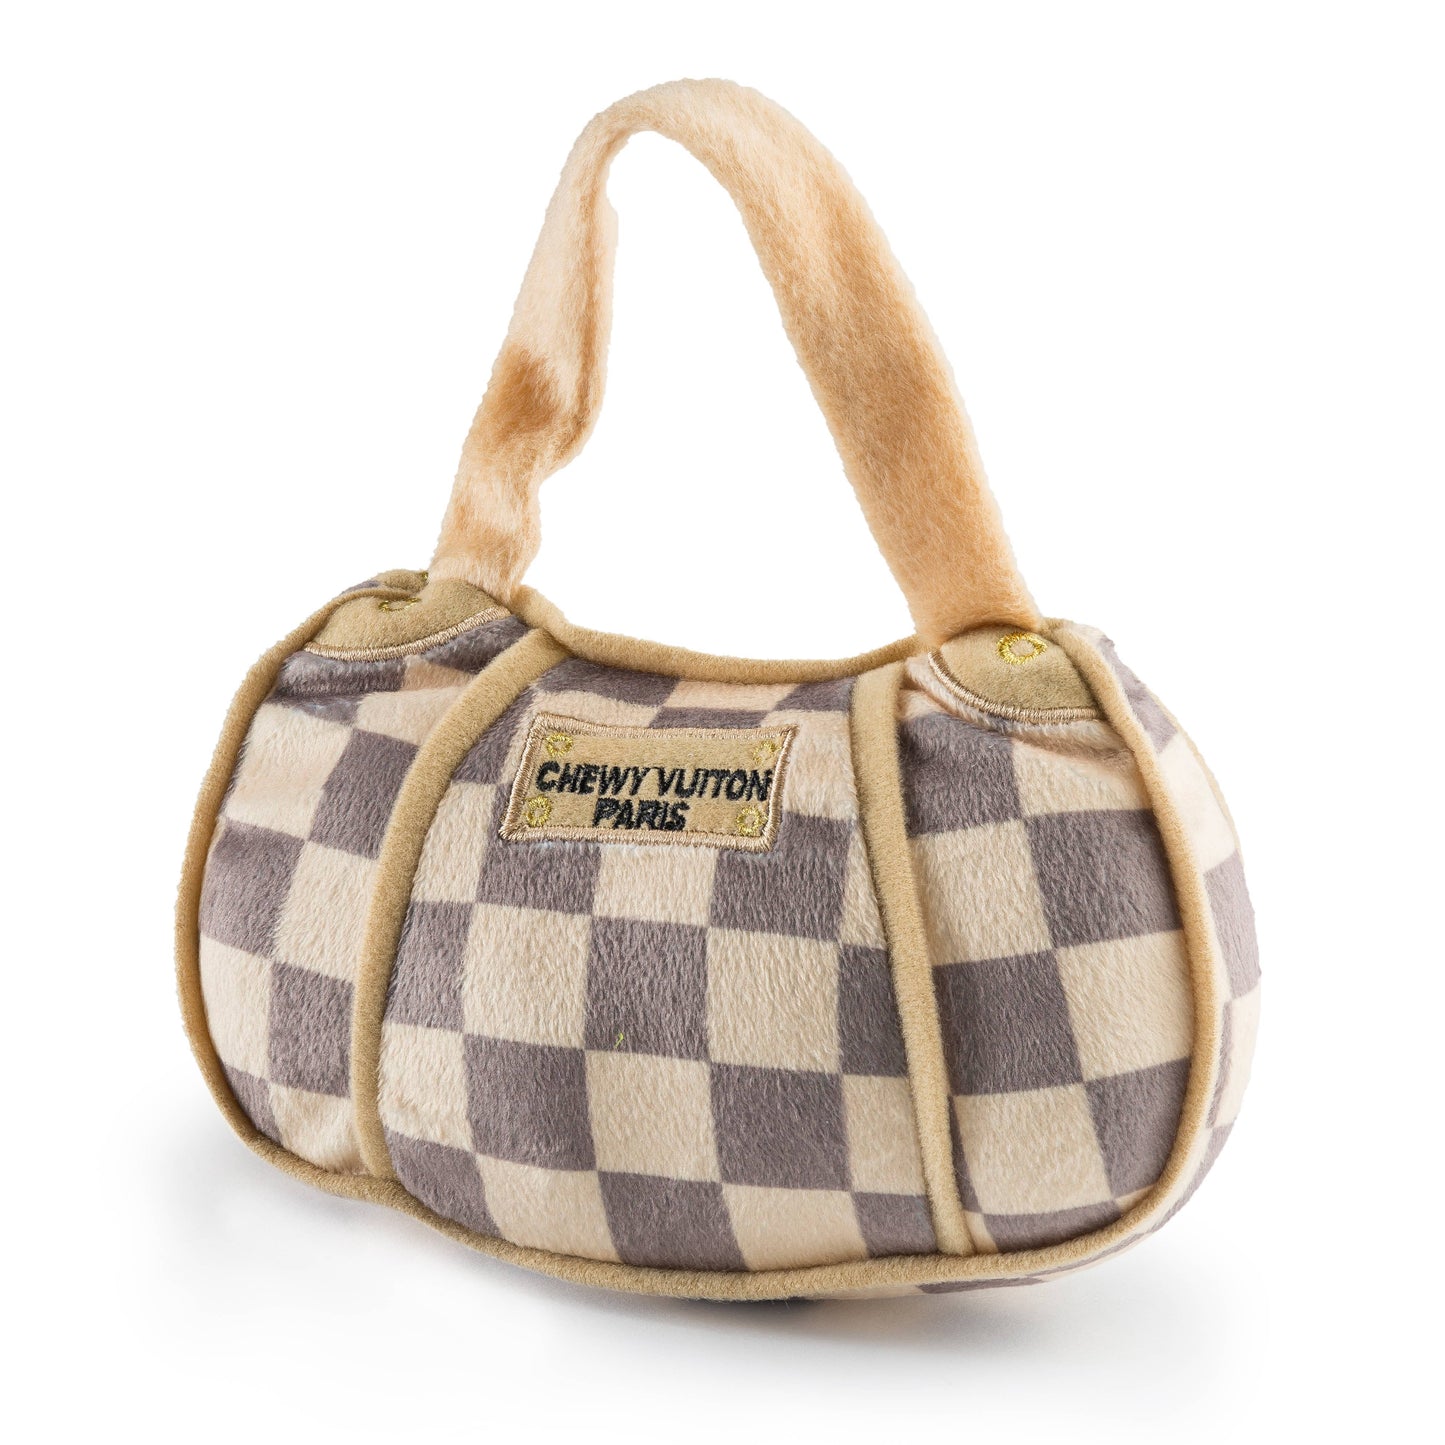 The Checker Chewy Vuiton Handbag Squeaker Dog Toy